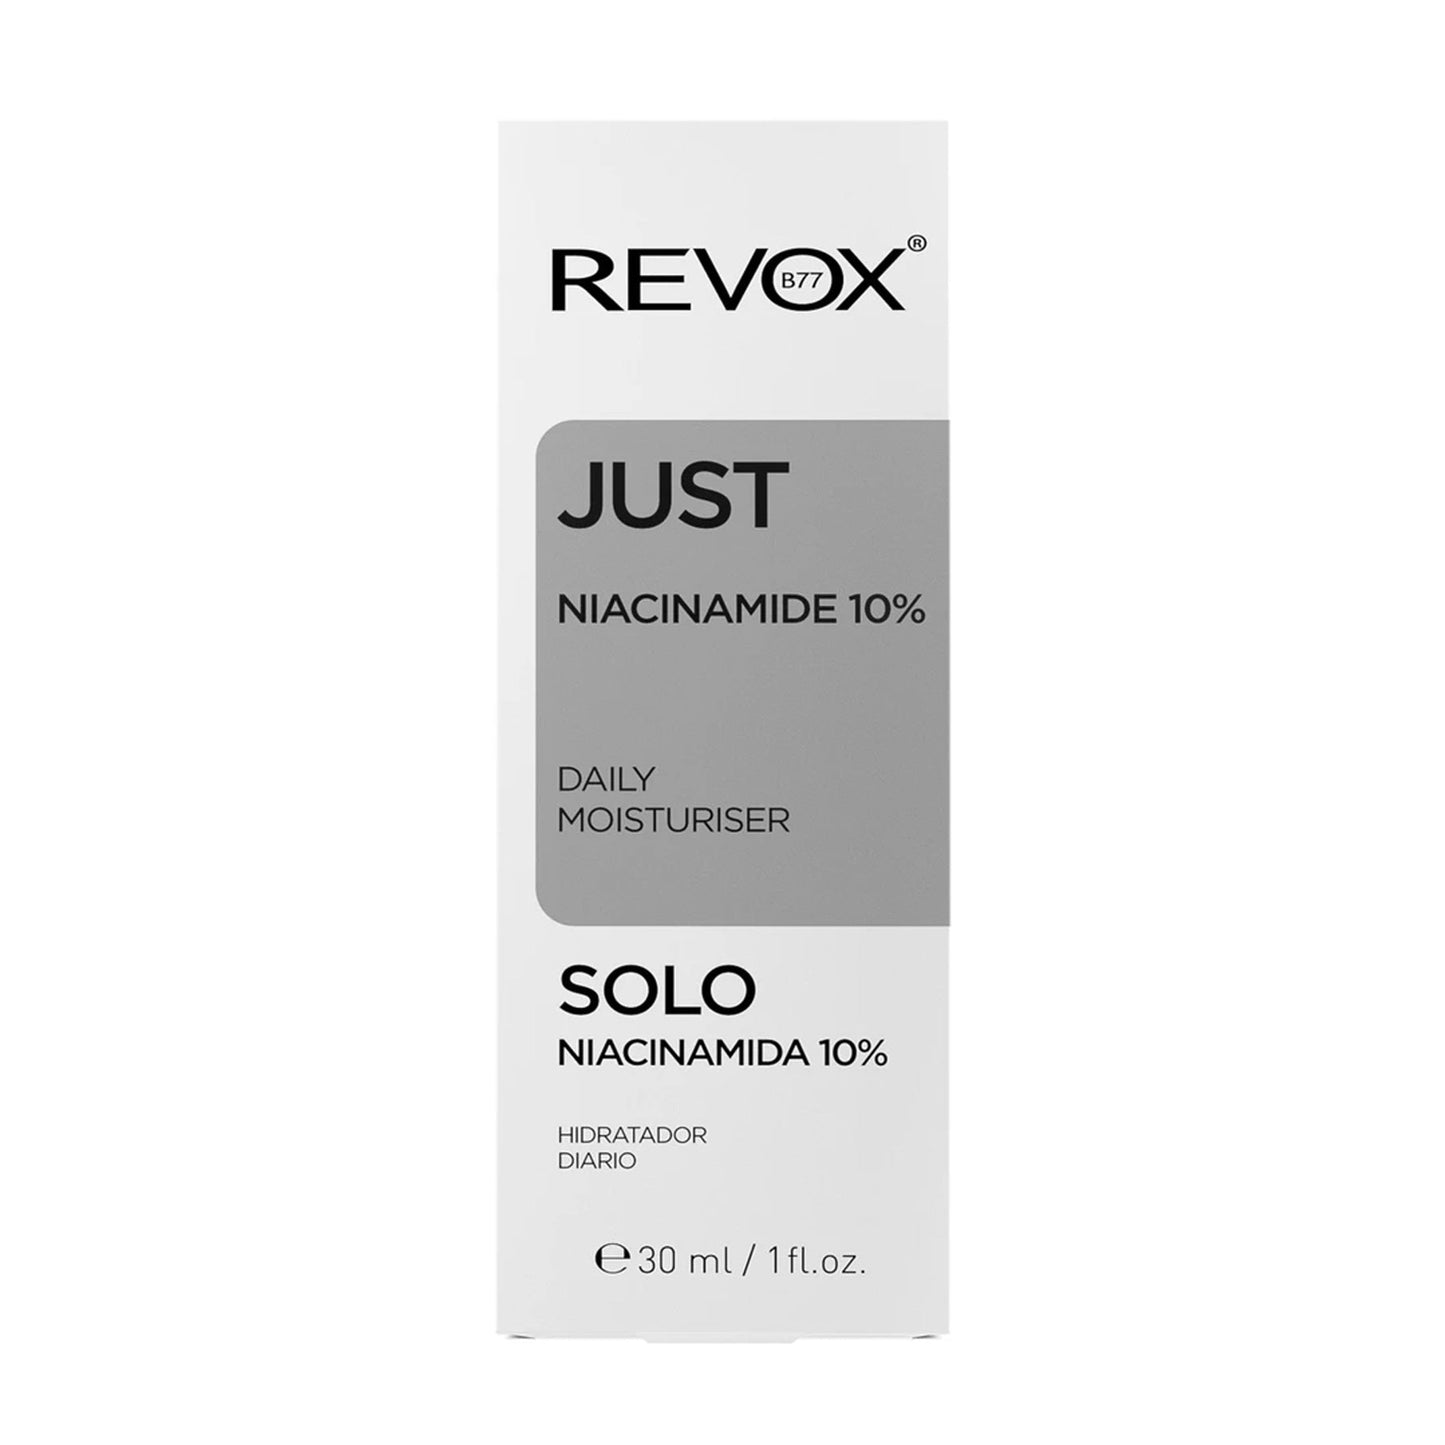 Revox B77 JUST Niacinamide 10%